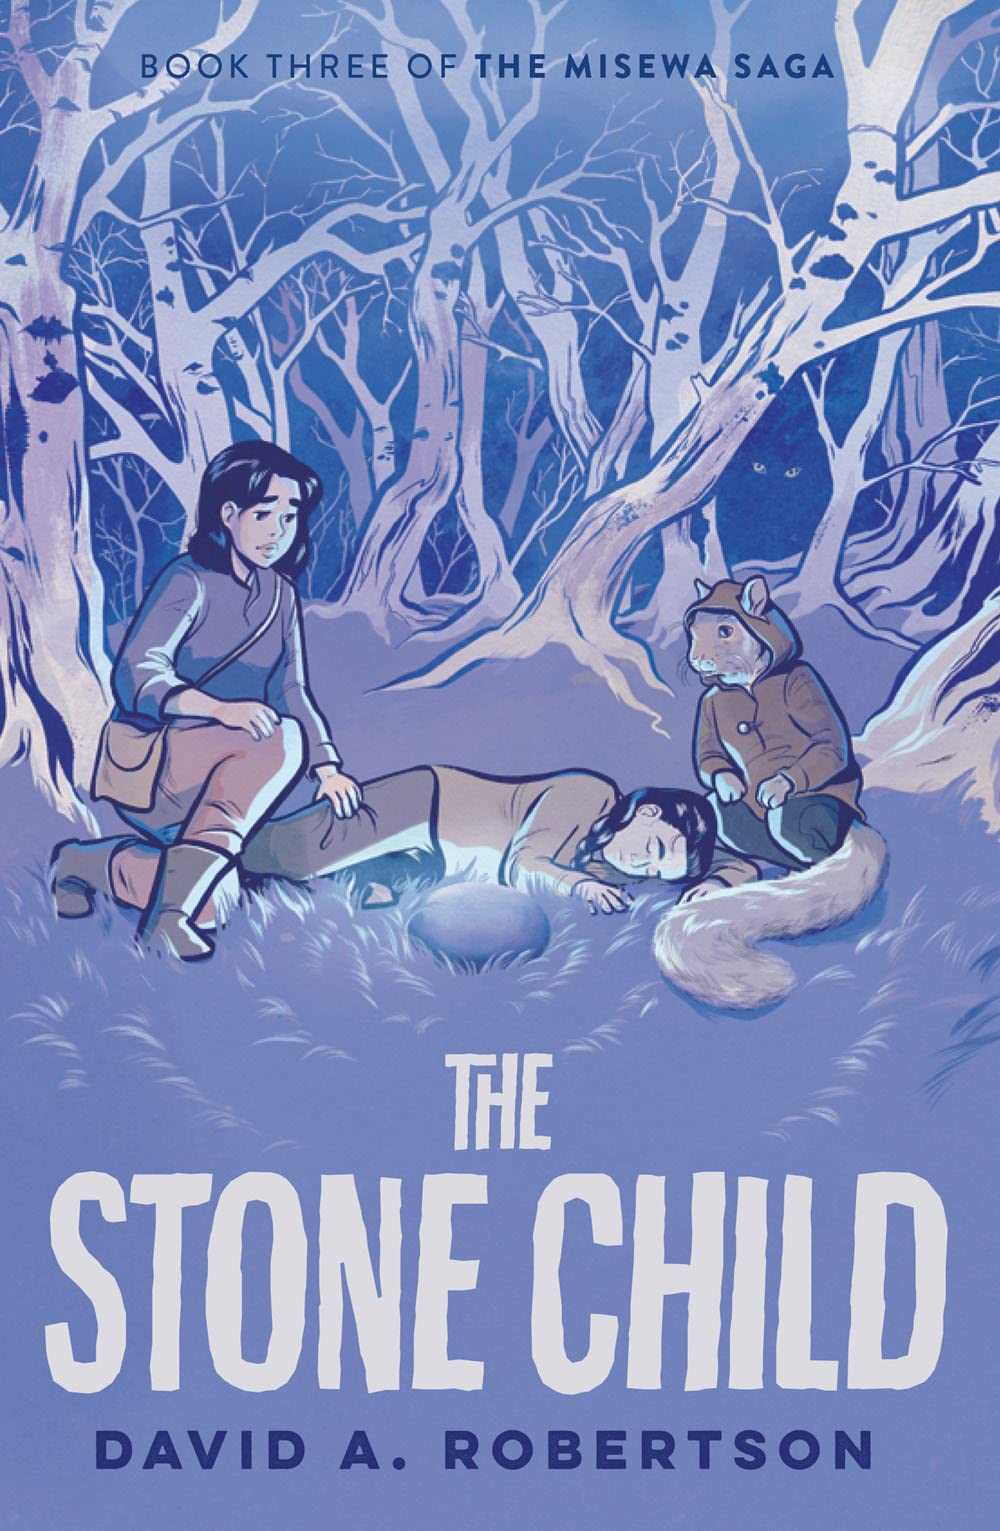 The Stone Child: The Misewa Saga (Book Three) by David A. Robertson